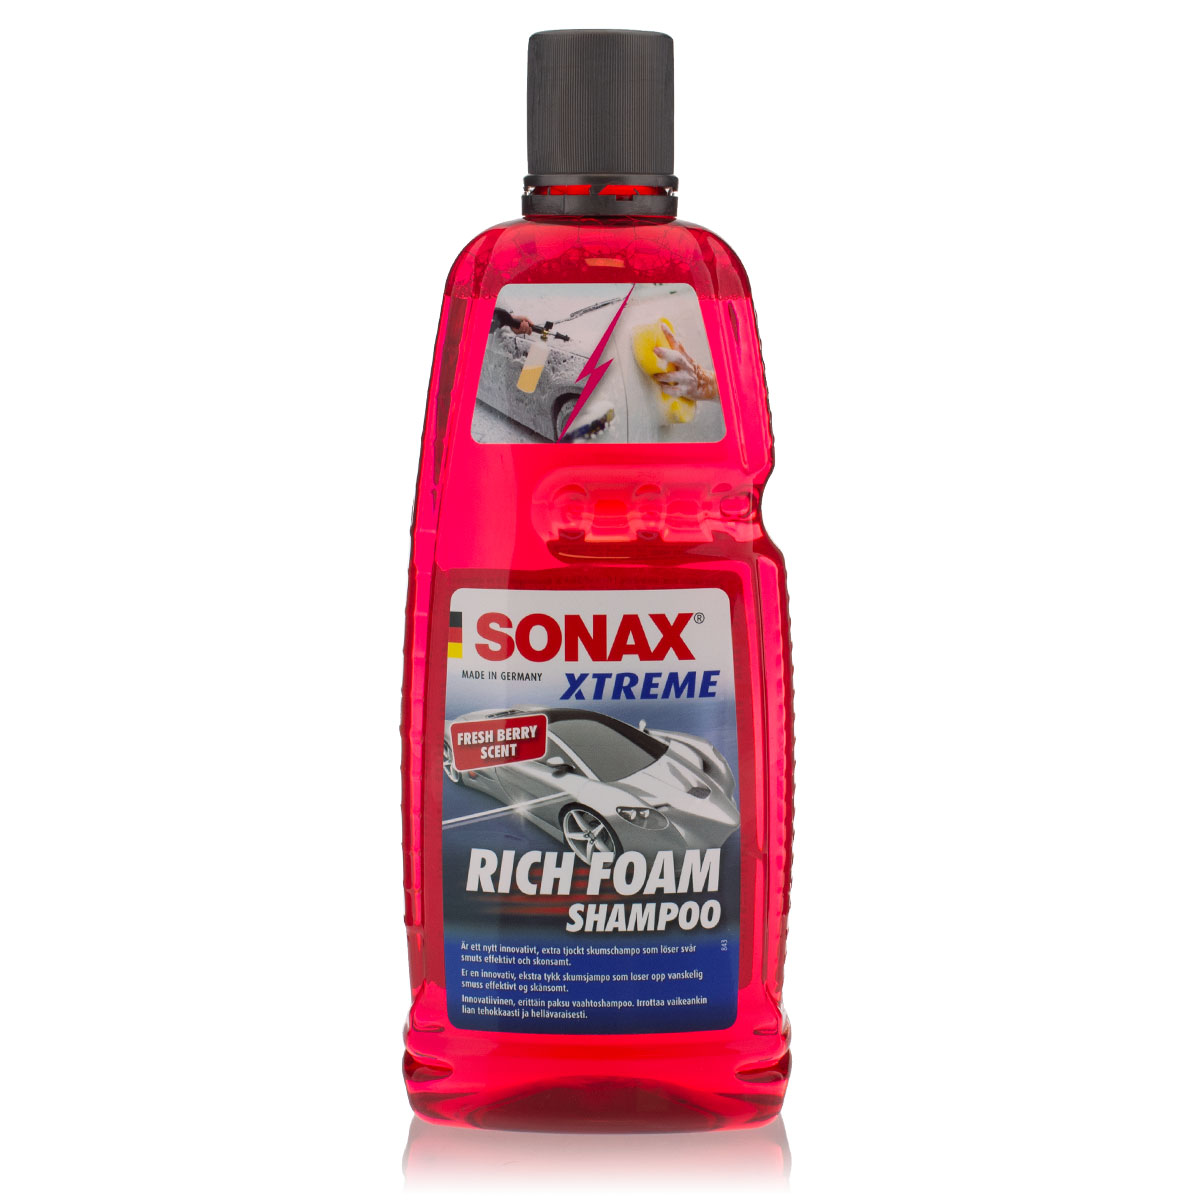 Sonax Xtreme Rich foam shampoo fresh berry scent 1000ml